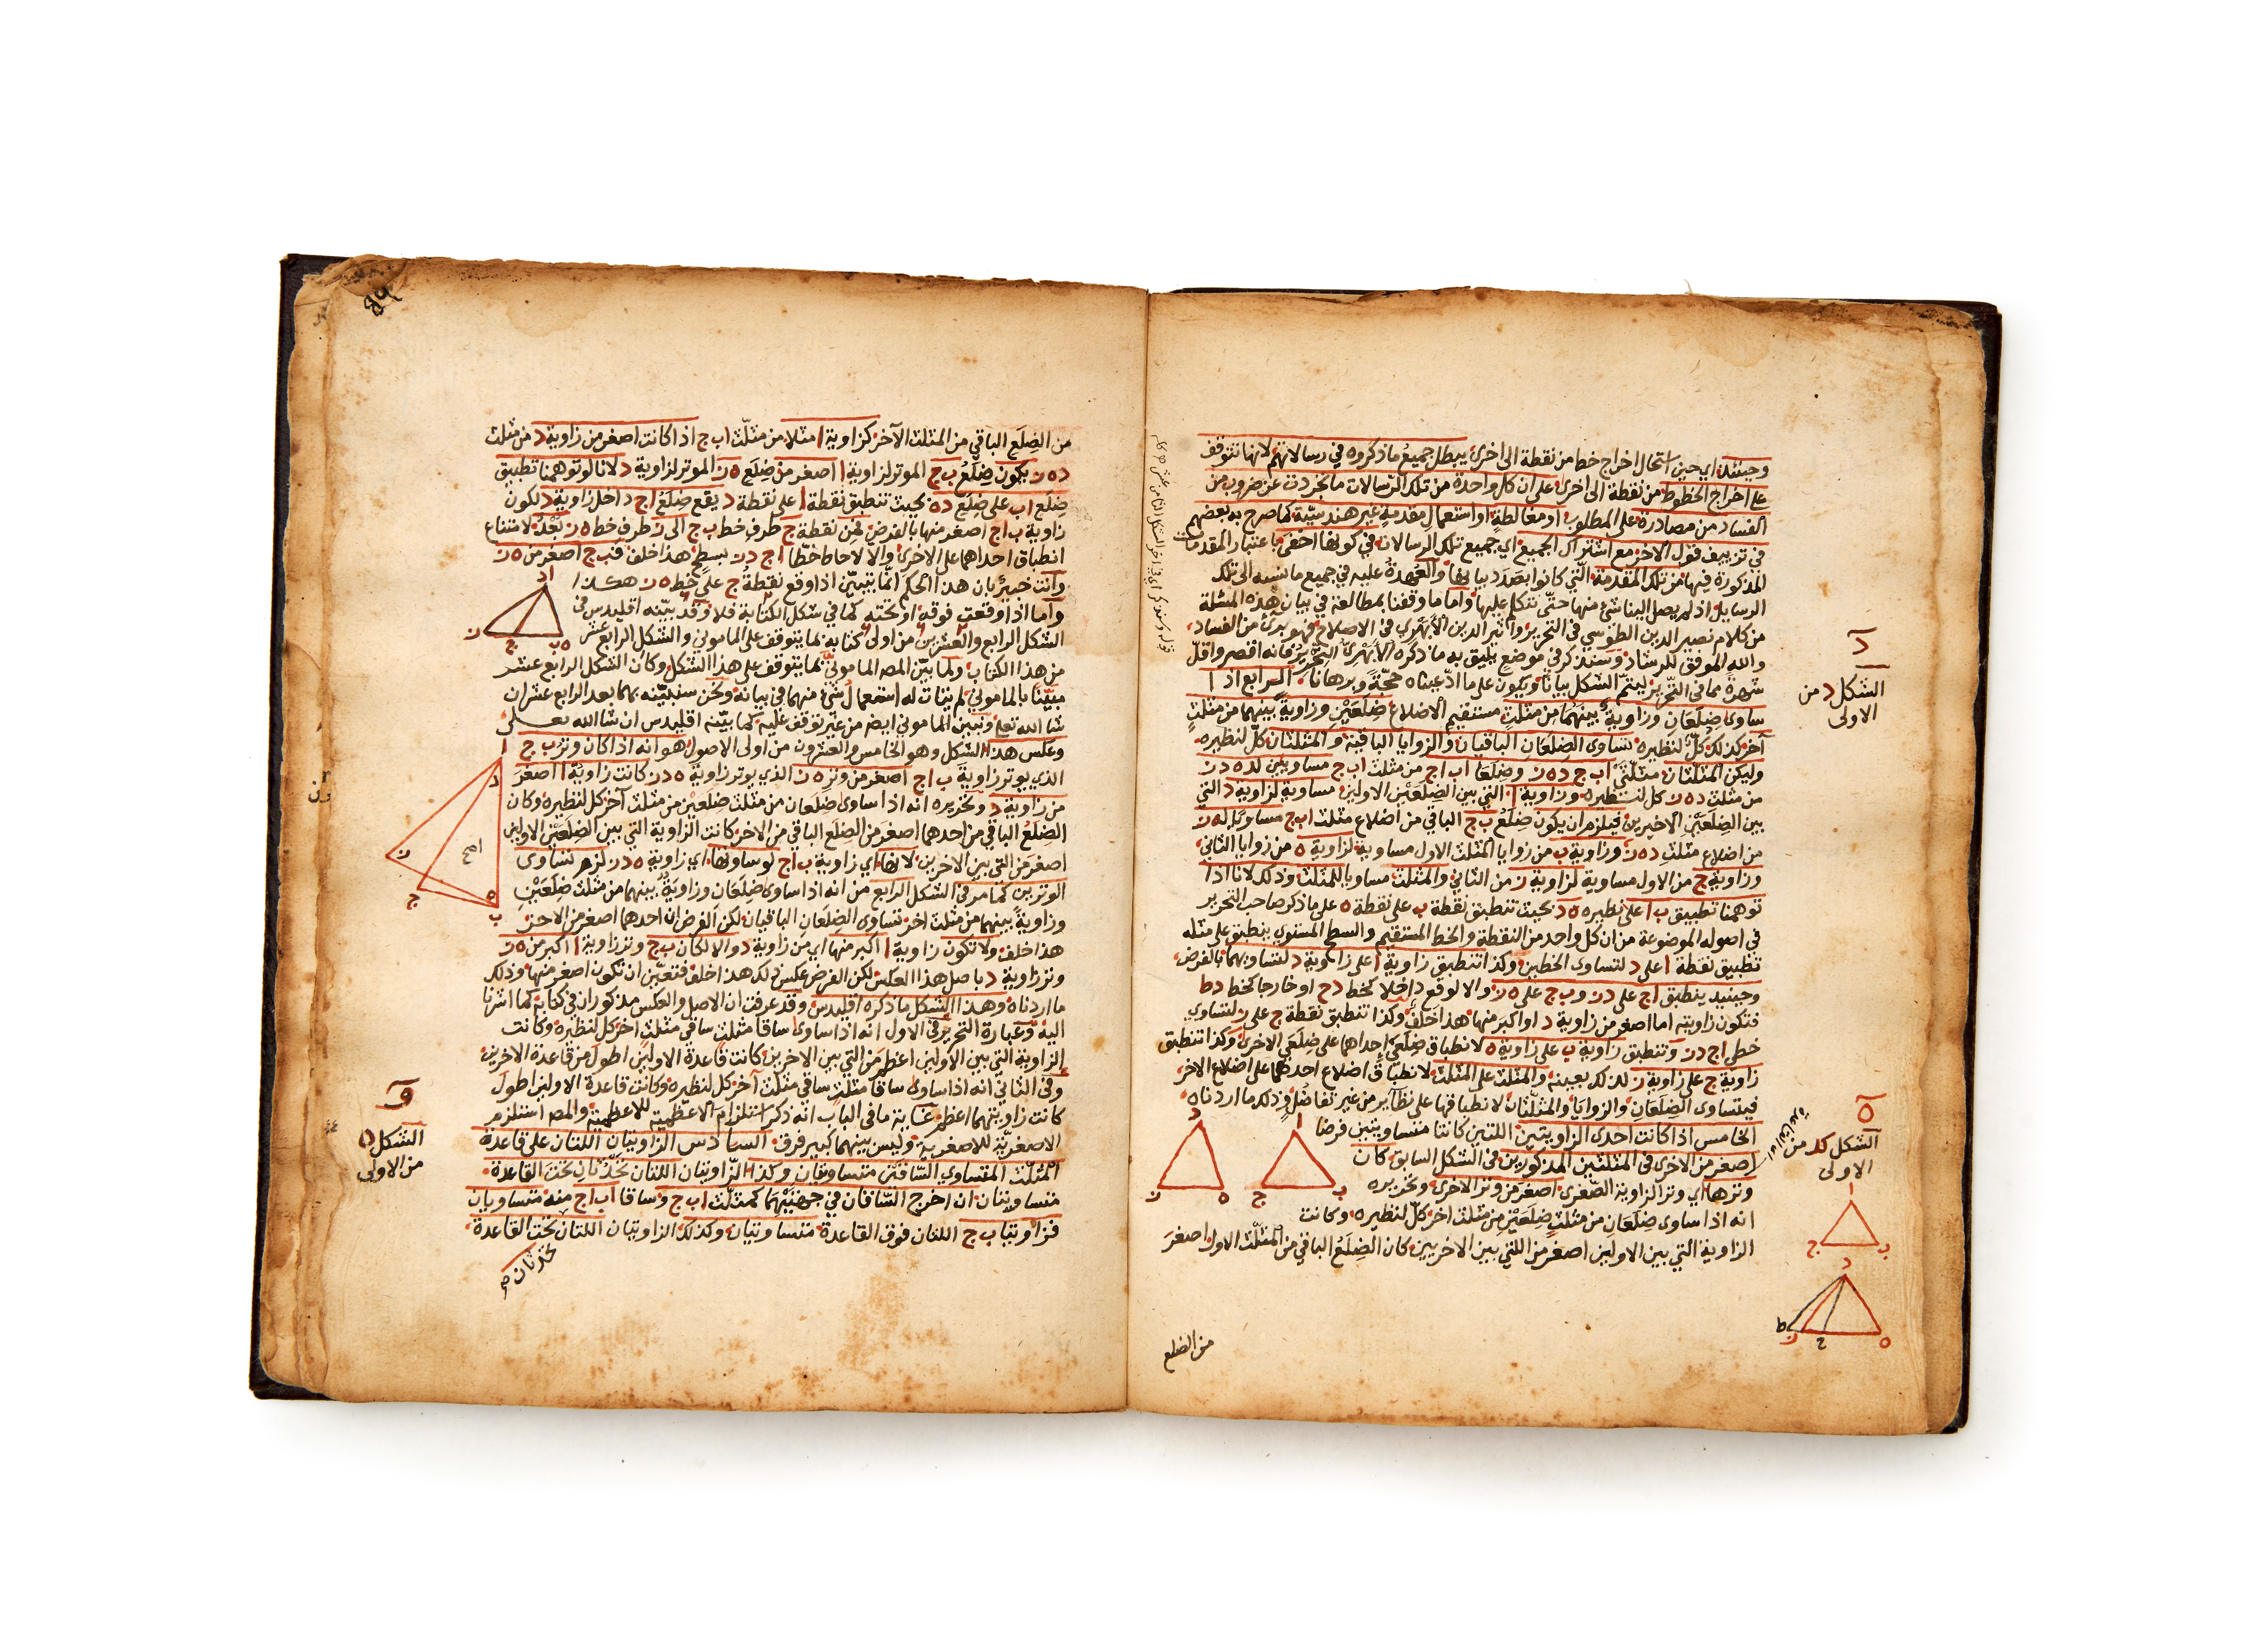 ABDUL MOUTI BIN HASSAN BIN ABDULLAH AL MEKKI, A MANUSCRIPT ABOUT GEOMETRY & MATHS, DATED 983AH - Image 10 of 16